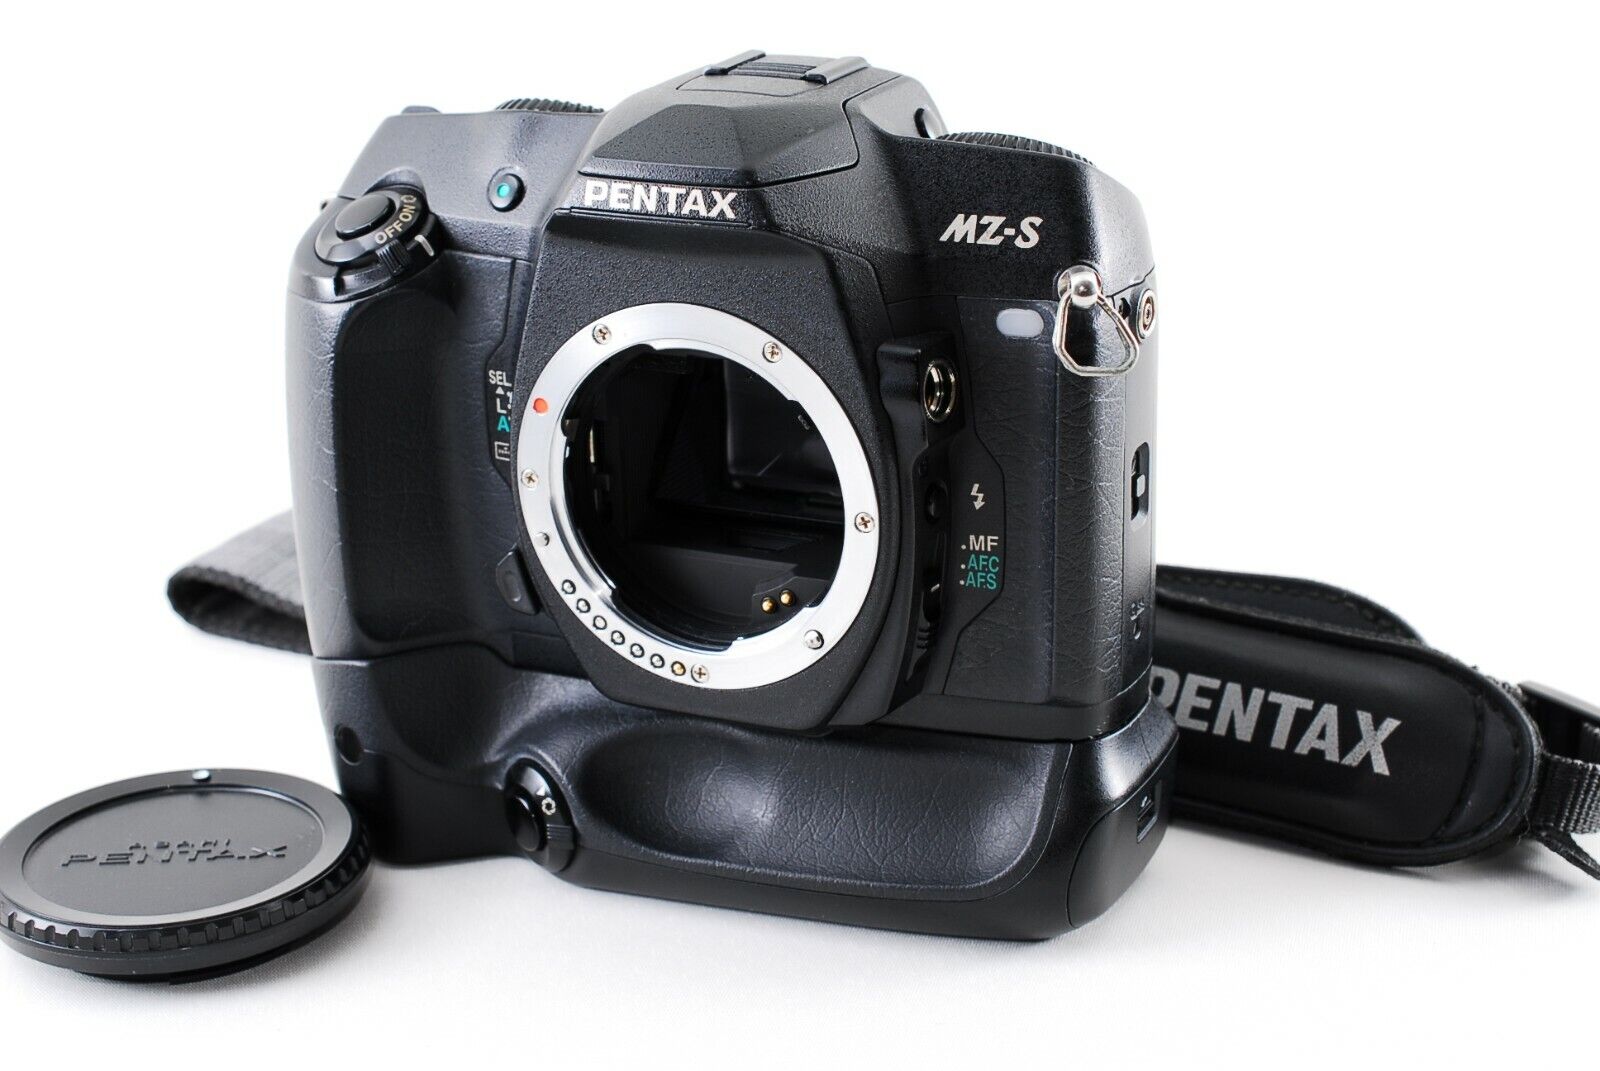 Excellent++++ Pentax MZ-S 35mm SLR Film Camera Body + BG-10 from Japan 1843